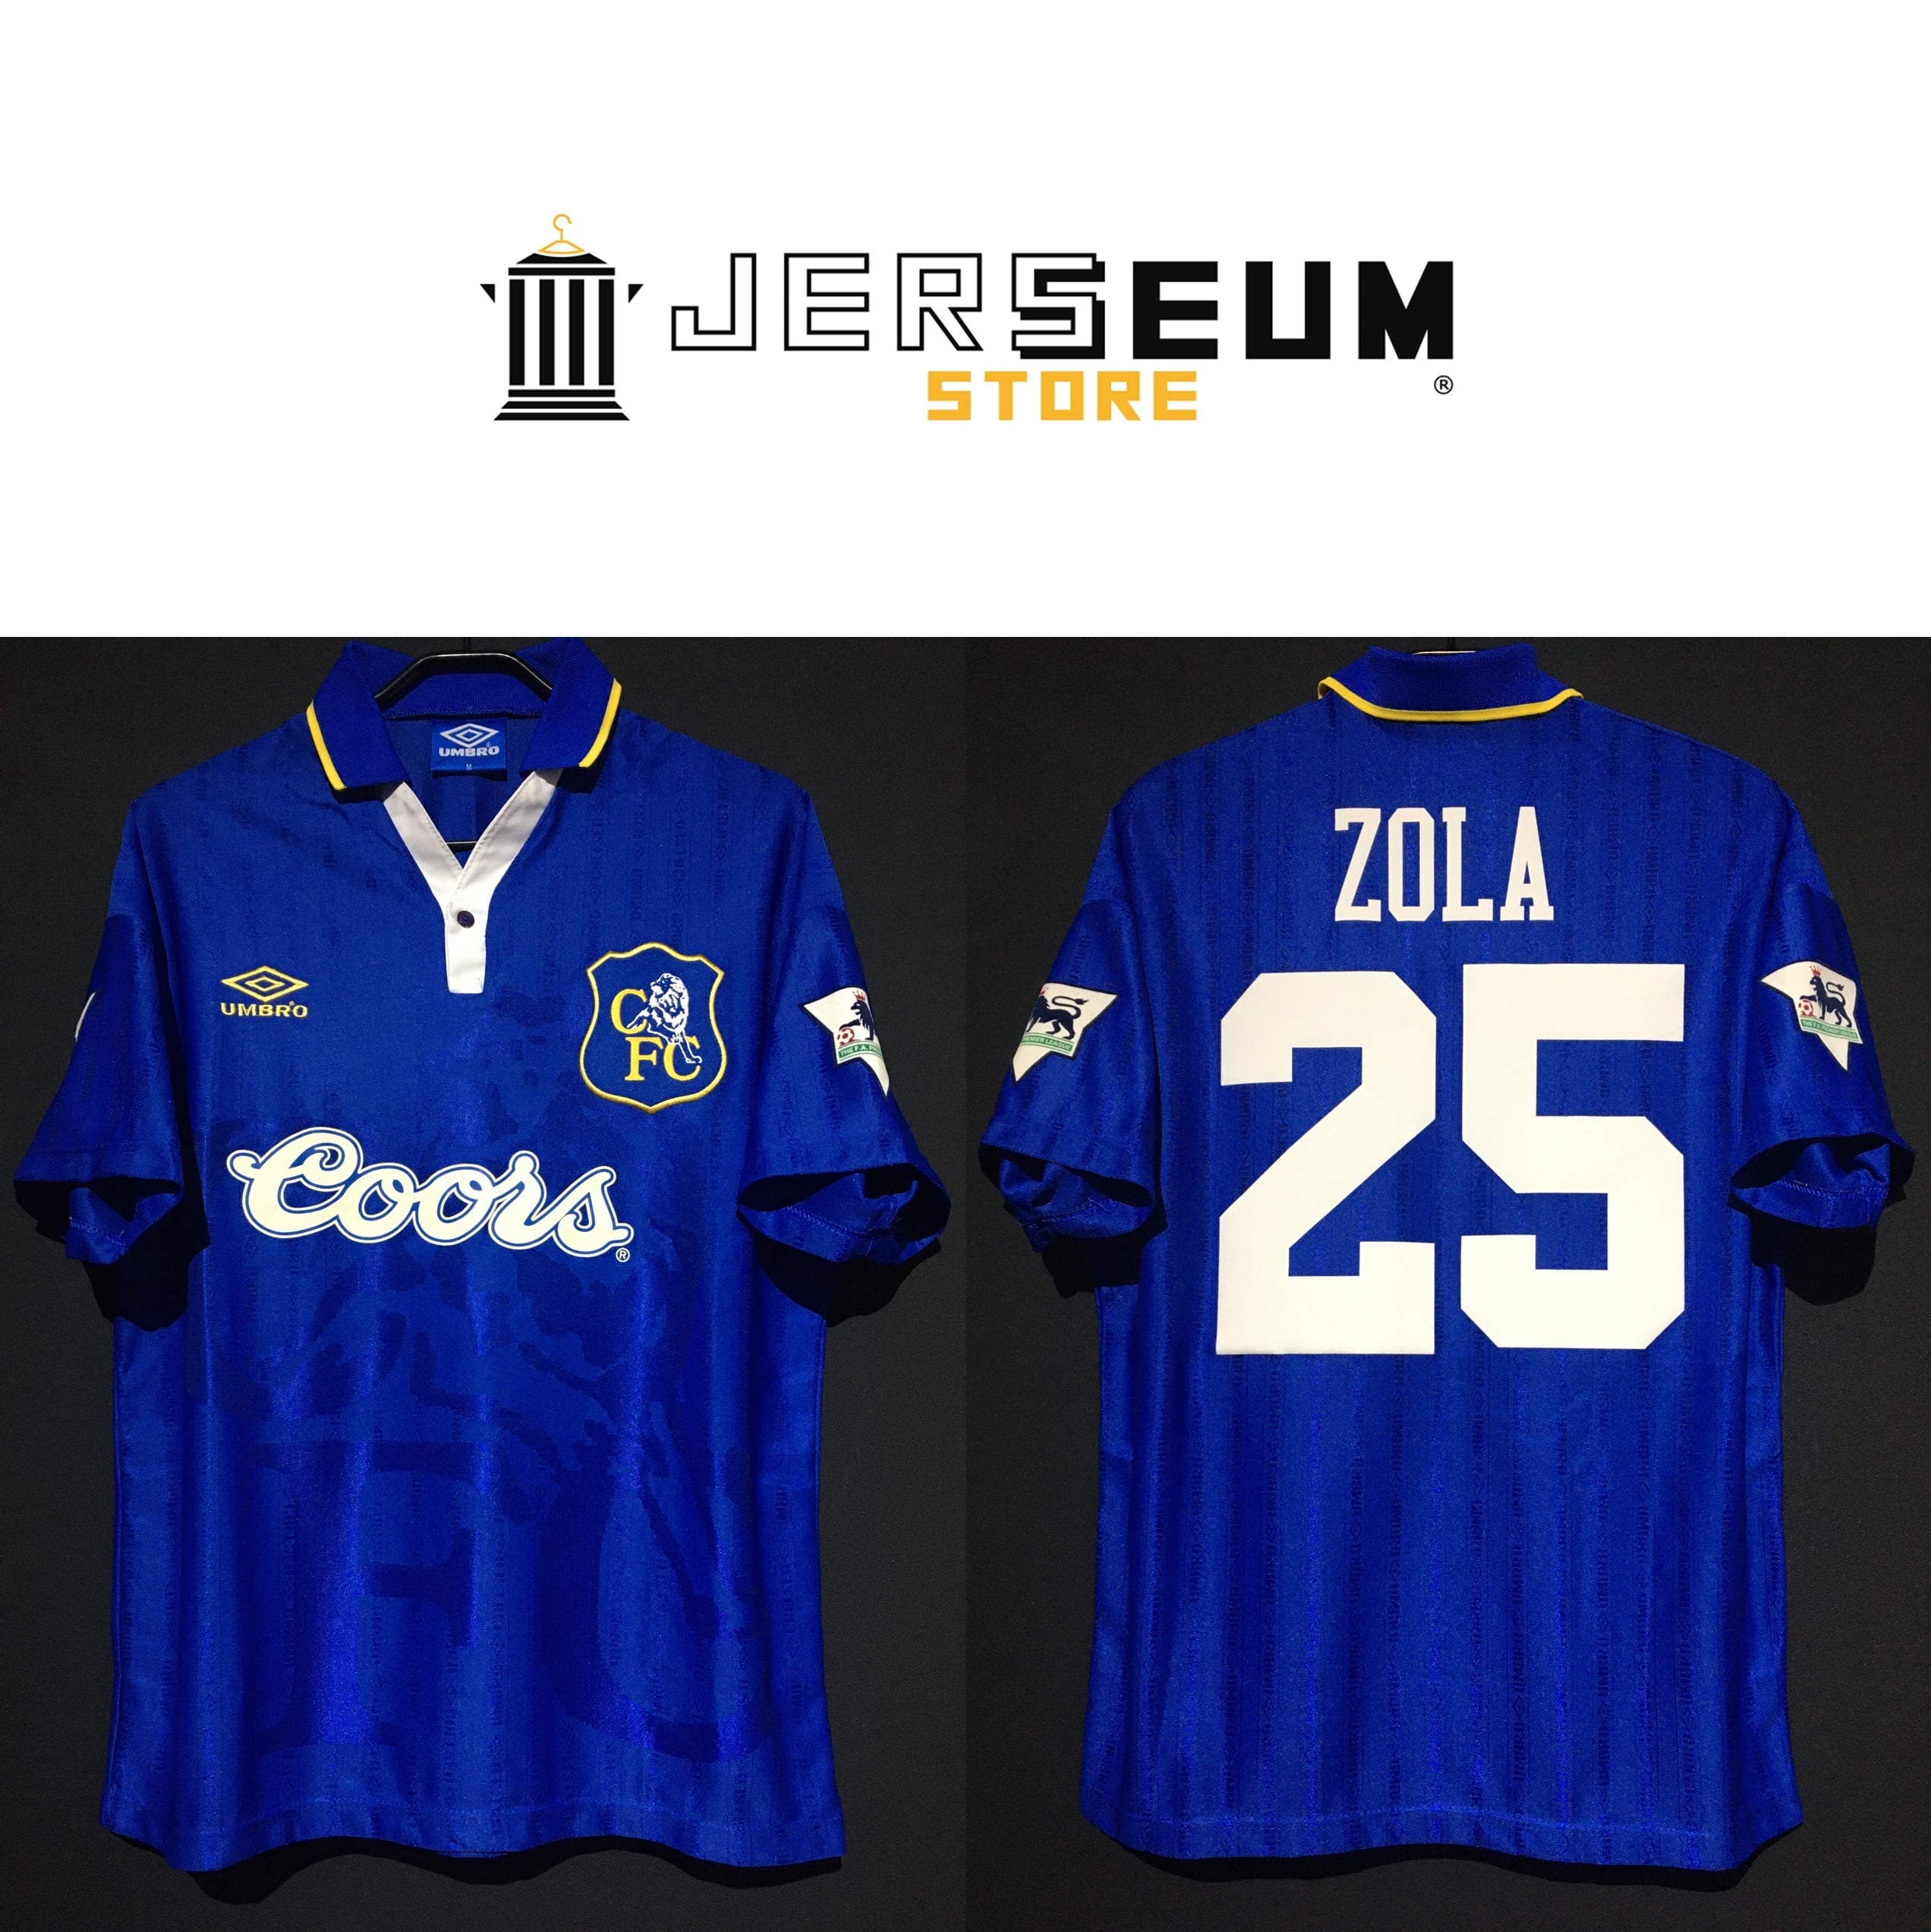 1996/97】 Chelsea Condition：Preowned Grade：5 Size：M No.25  ZOLA Jerseum Store